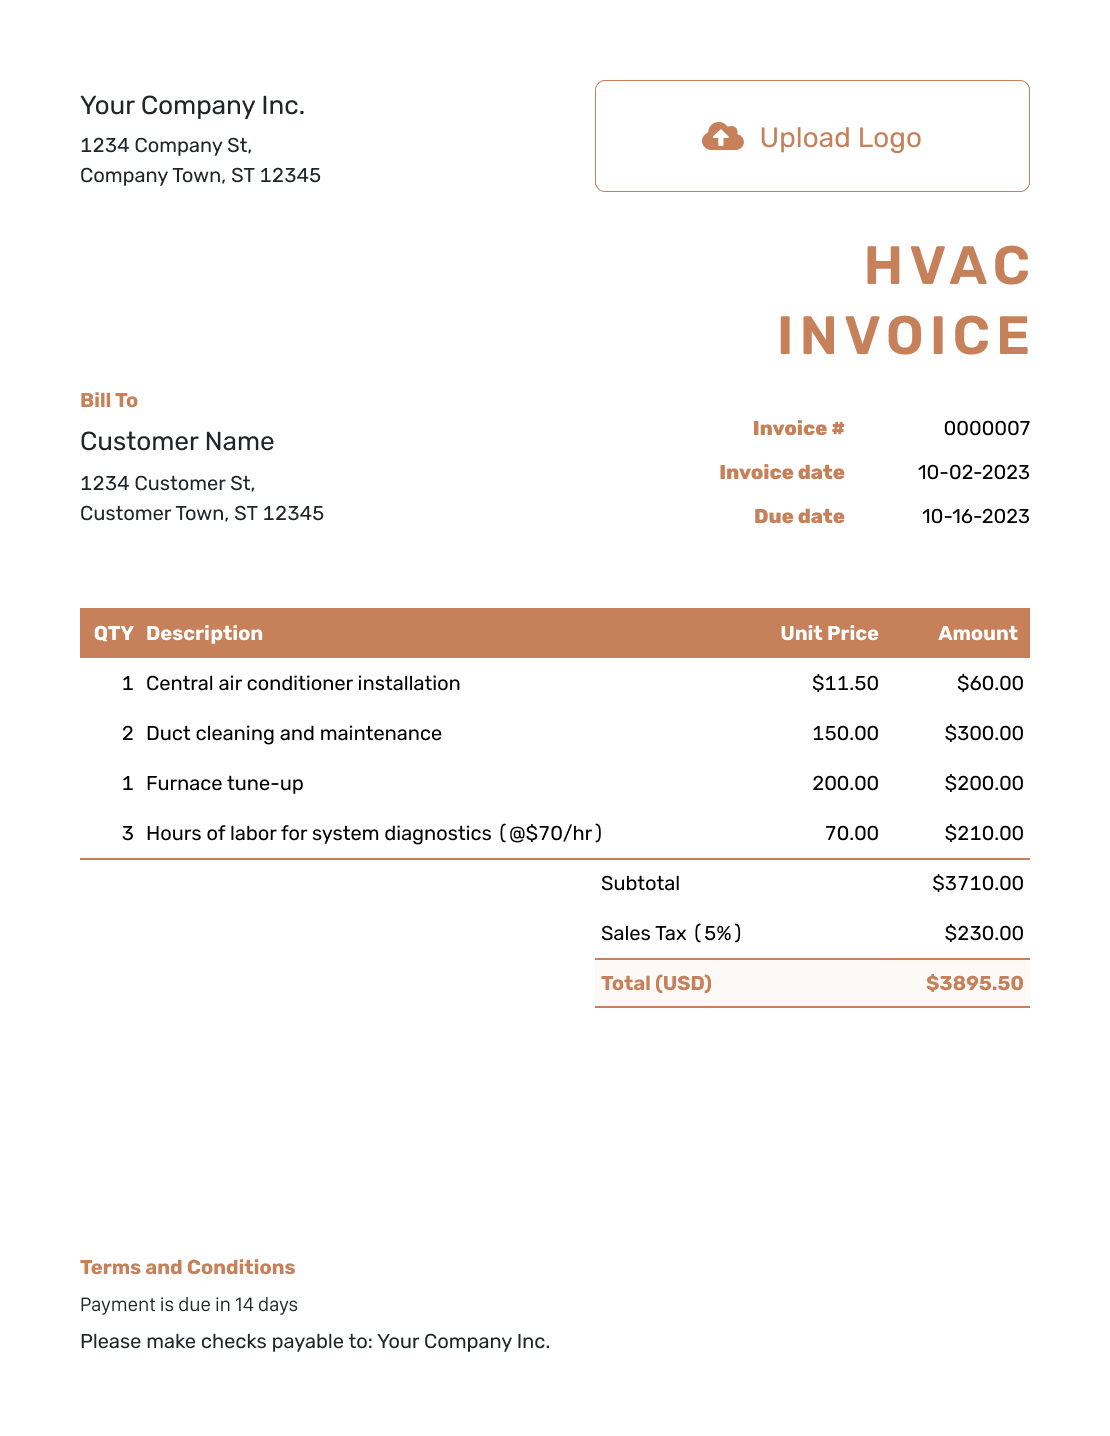 Standard HVAC Invoice Template